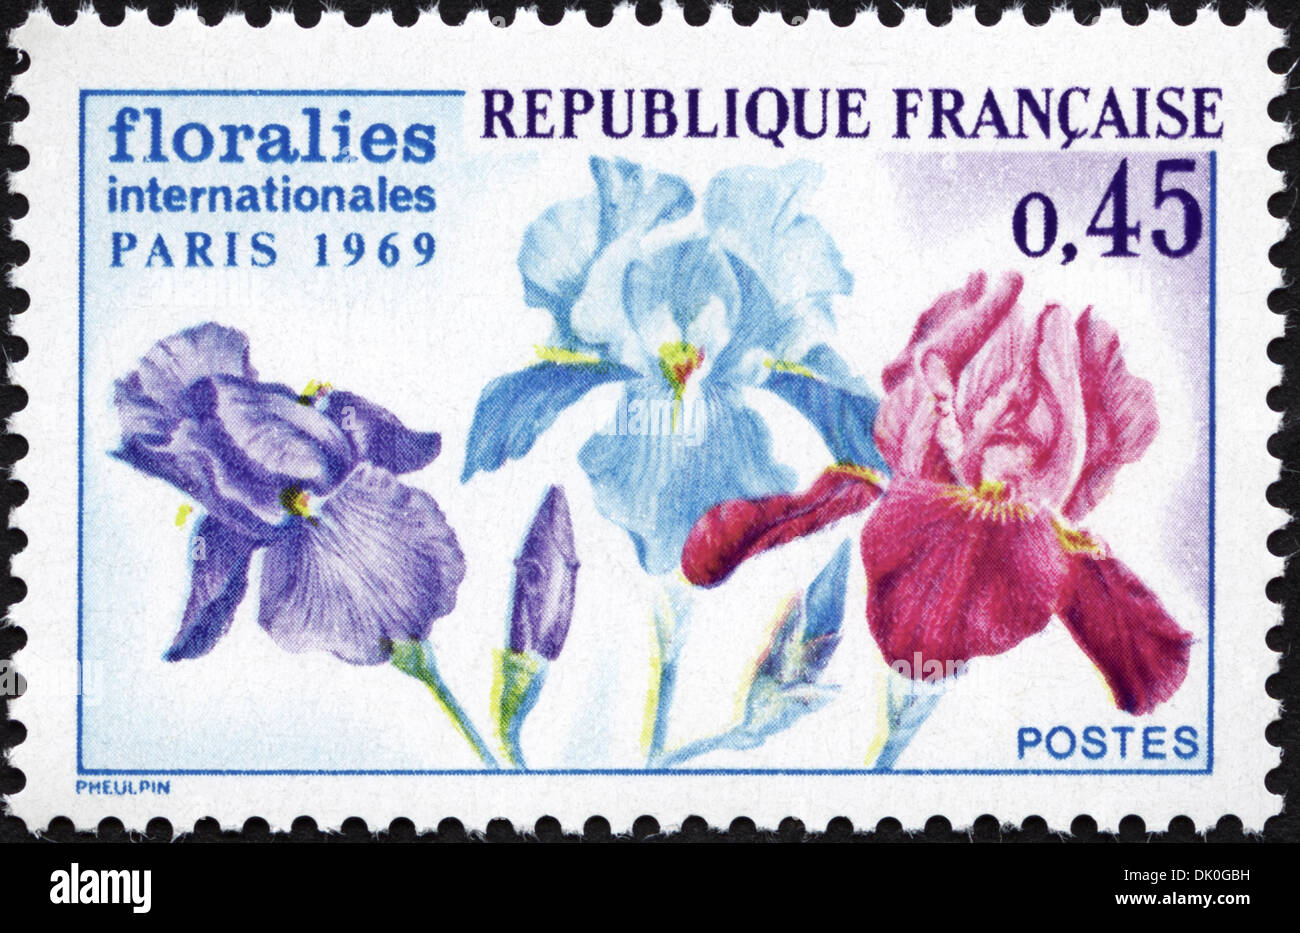 Sello República Francesa 0,45 con exposición floral Internacional 1969 publicado 1969 Foto de stock